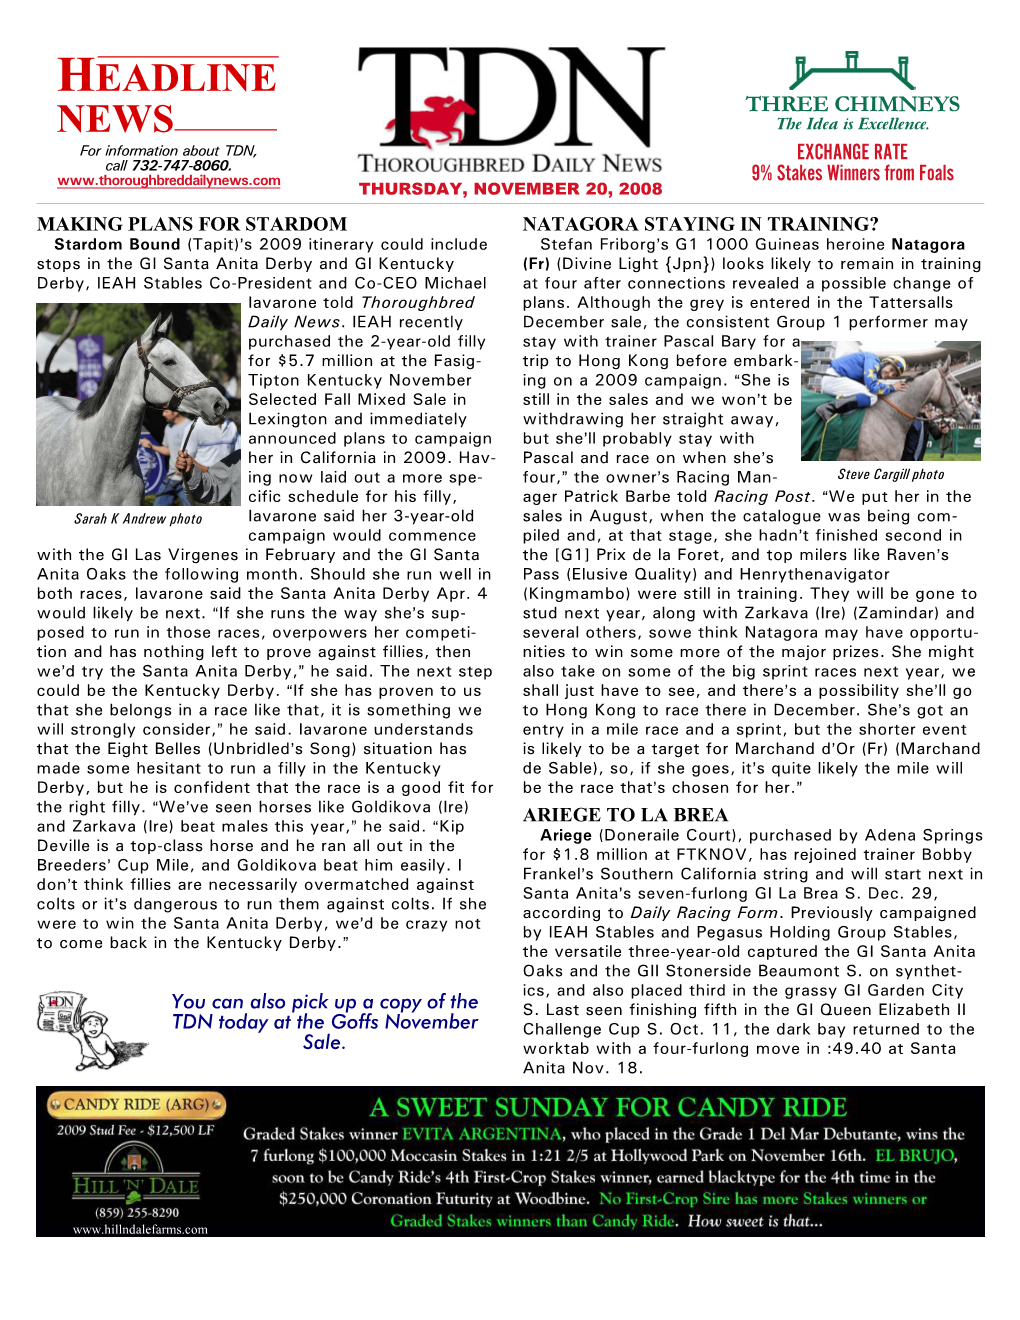 HEADLINE NEWS • 11/20/08 • PAGE 2 of 5